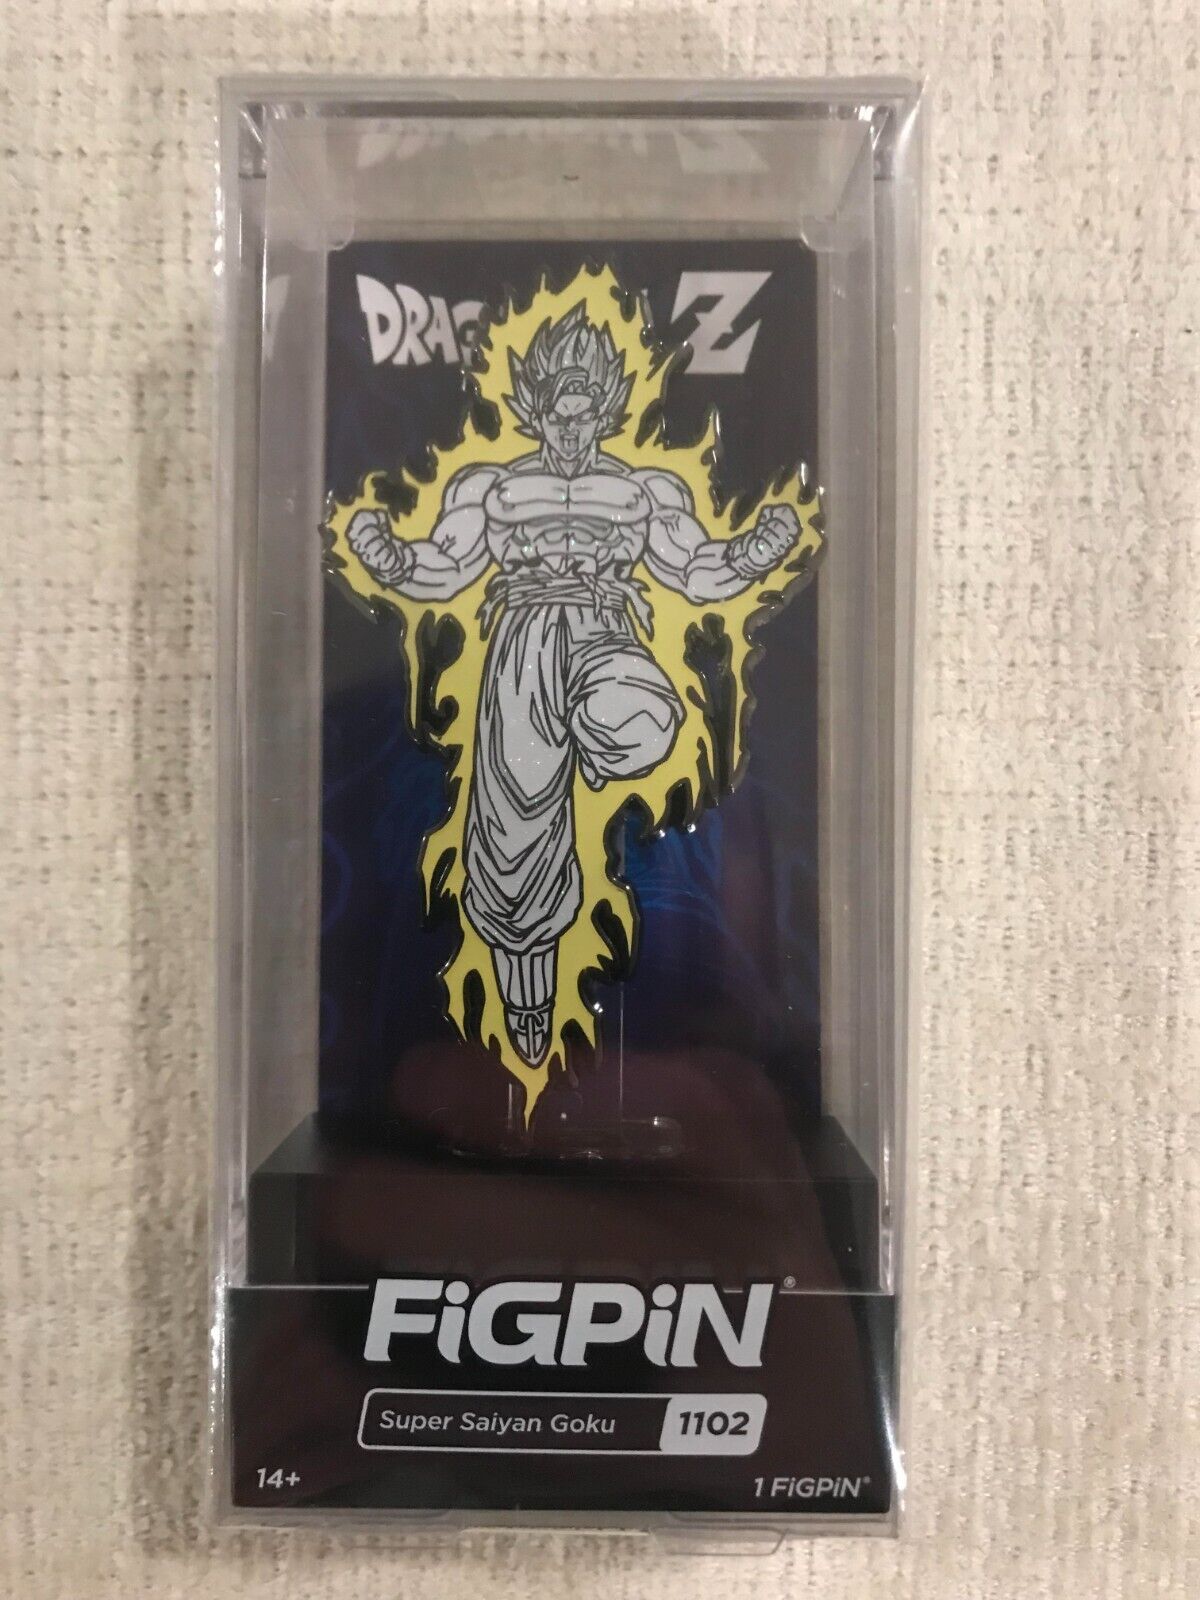 FiGPiN - Dragon Ball Z - Super Saiyan Goku #1102 NYCC 2022 LE 2000 - Locked